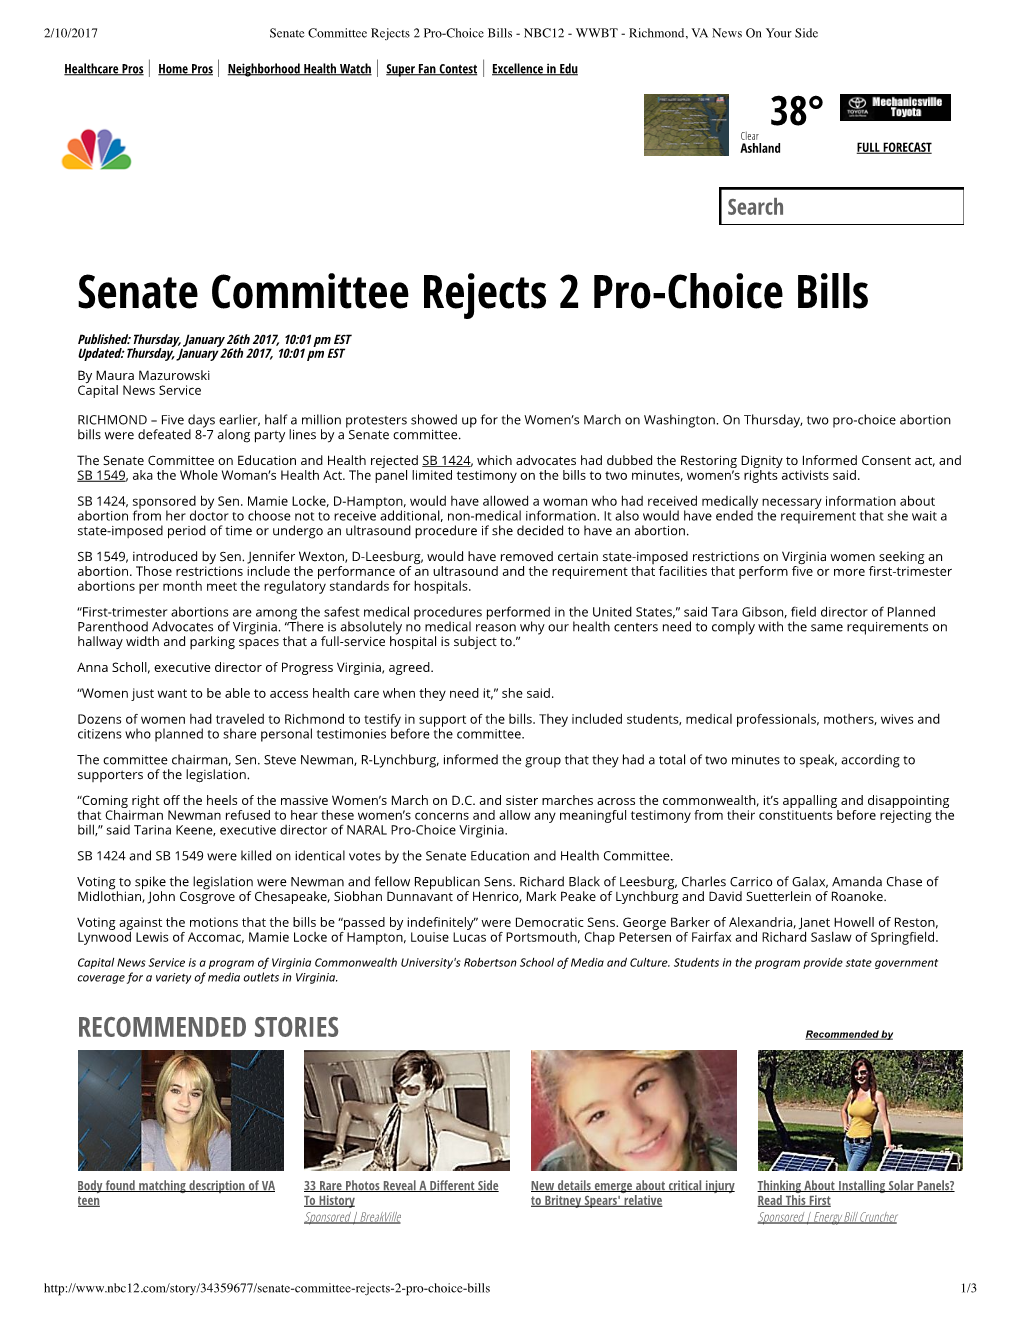 Senate Committee Rejects 2 Pro-Choice Bills - NBC12 - WWBT - Richmond, VA News on Your Side